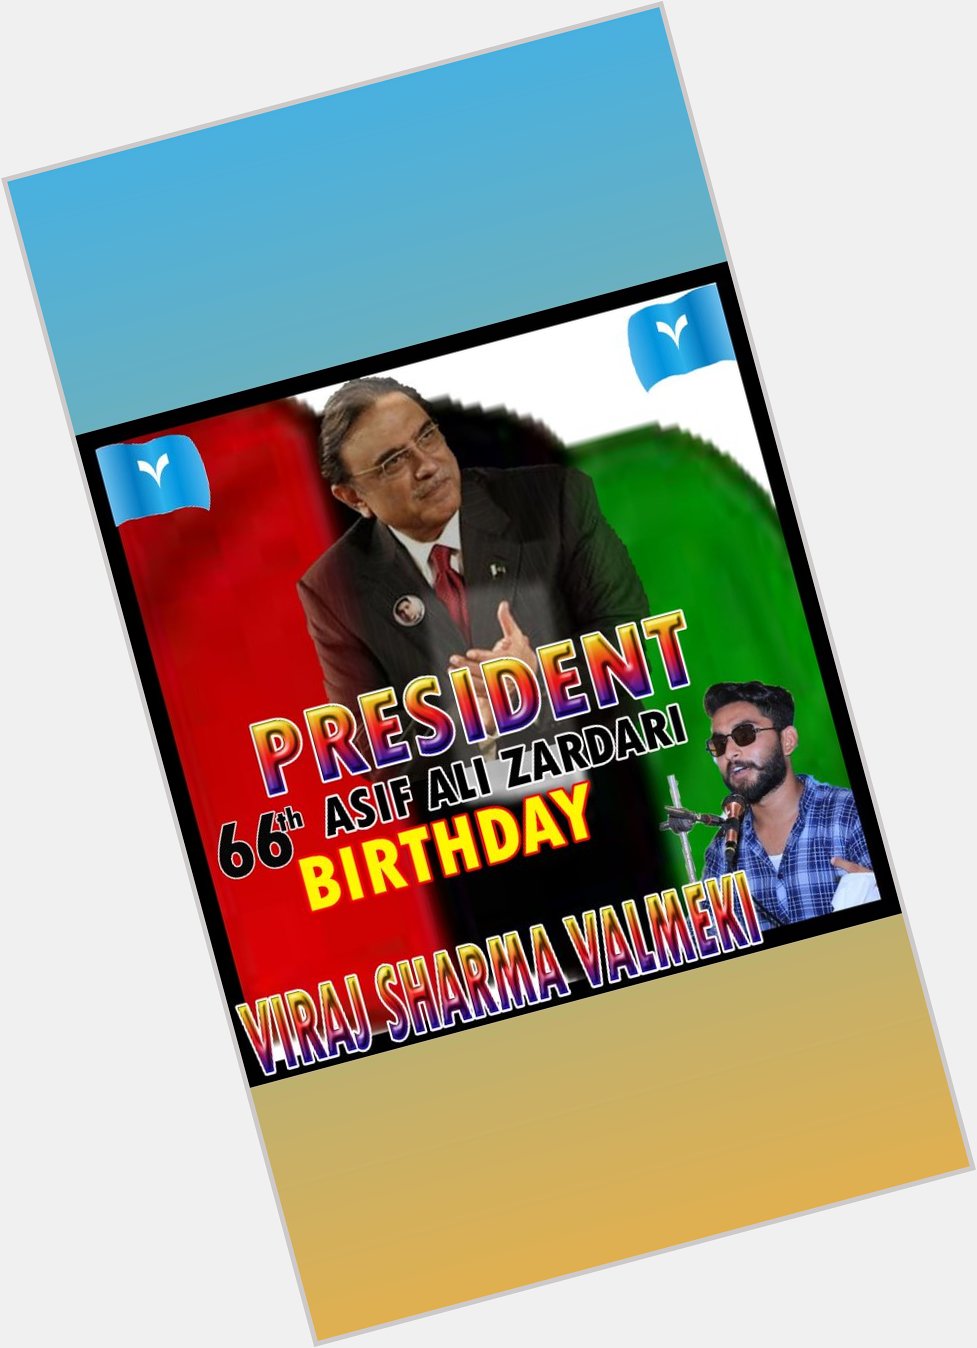 Happy Birthday to Mard-e-Hur President Asif Ali Zardari! 